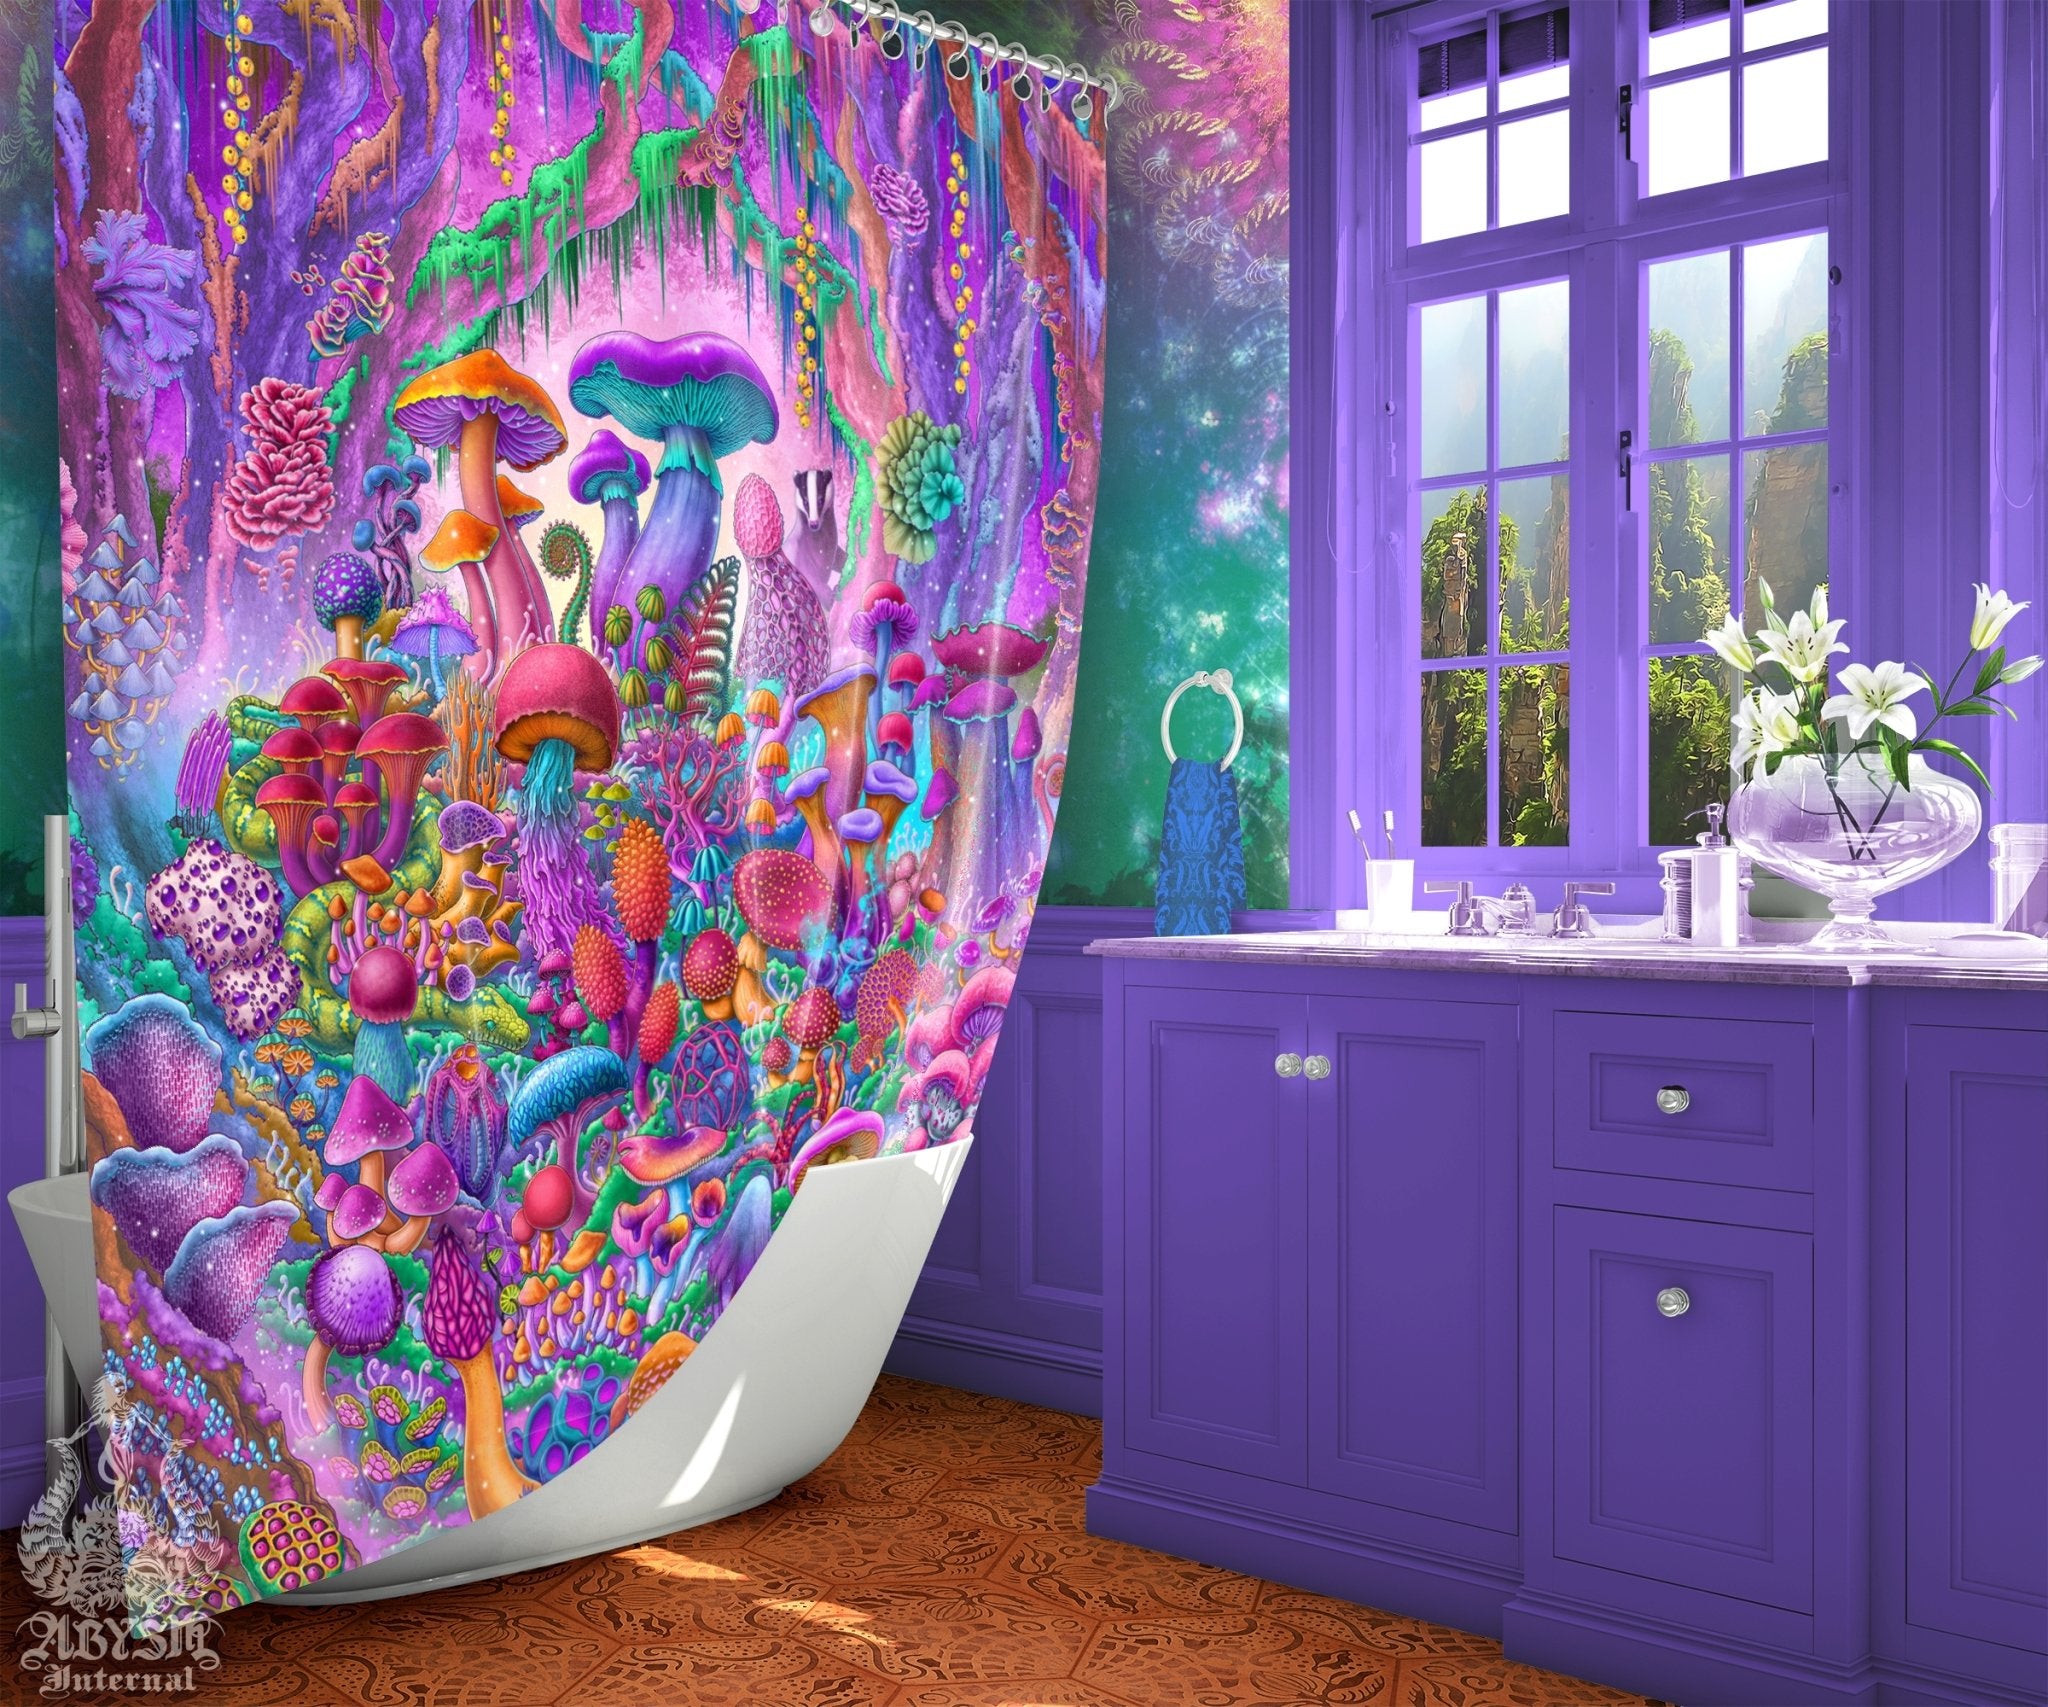 Pastel Mushrooms Shower Curtain, Girl Bathroom Decor, Aesthetic Home Art, Mycologist Gift - Magic Shrooms - Abysm Internal